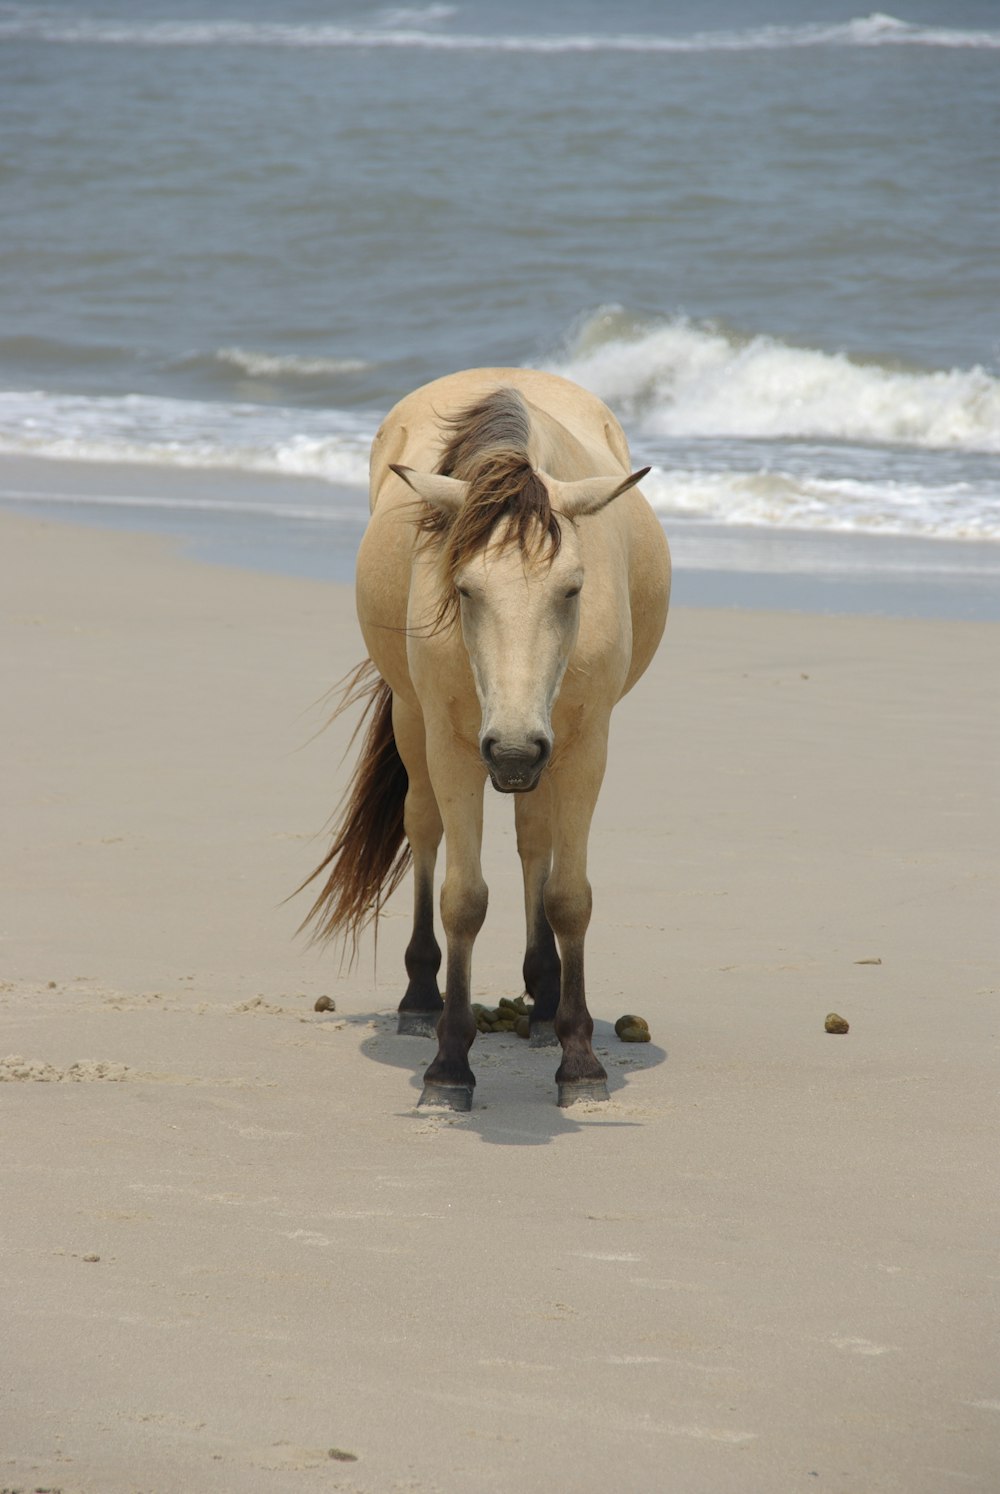 a horse walking on a beach next to the ocean